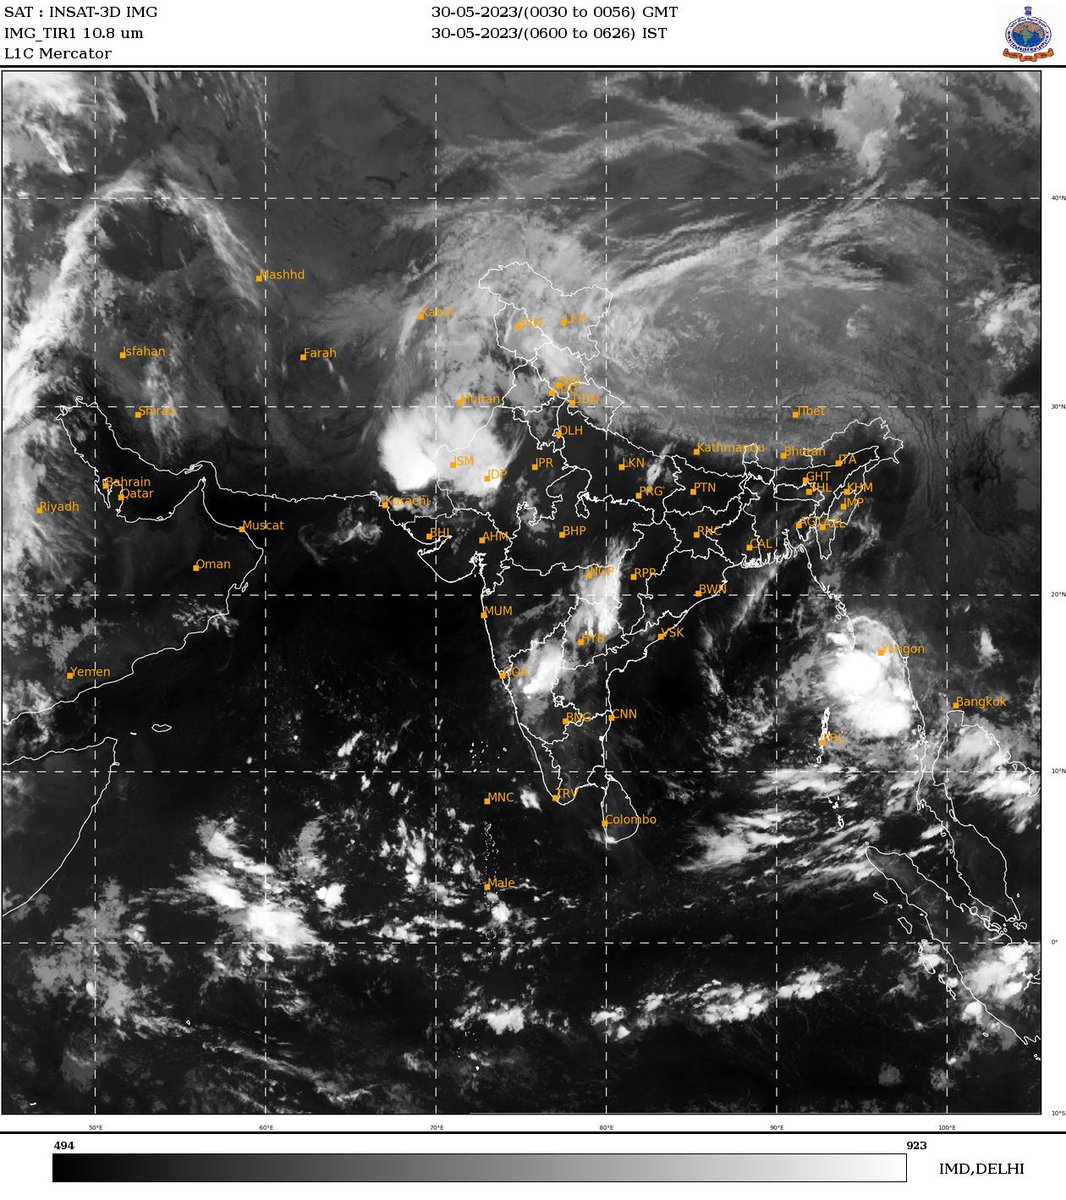 Light clouds & winds at some places N. Philippines(Tuguegarao),Taiwan,
S.Japan(Naha,Okinawa),Myanmar (Yangoon),Karnataka,Telangana (Gadwal),Vidarbha,W.Raj(Jaisalmer), Punjab,Uttrakhand(Badrinath,Kedarnath),HP(Chamba,Manali,Keylong),J&K
(Doda,Gulmarg),Iraq,Saudi Arabia, Ethopia